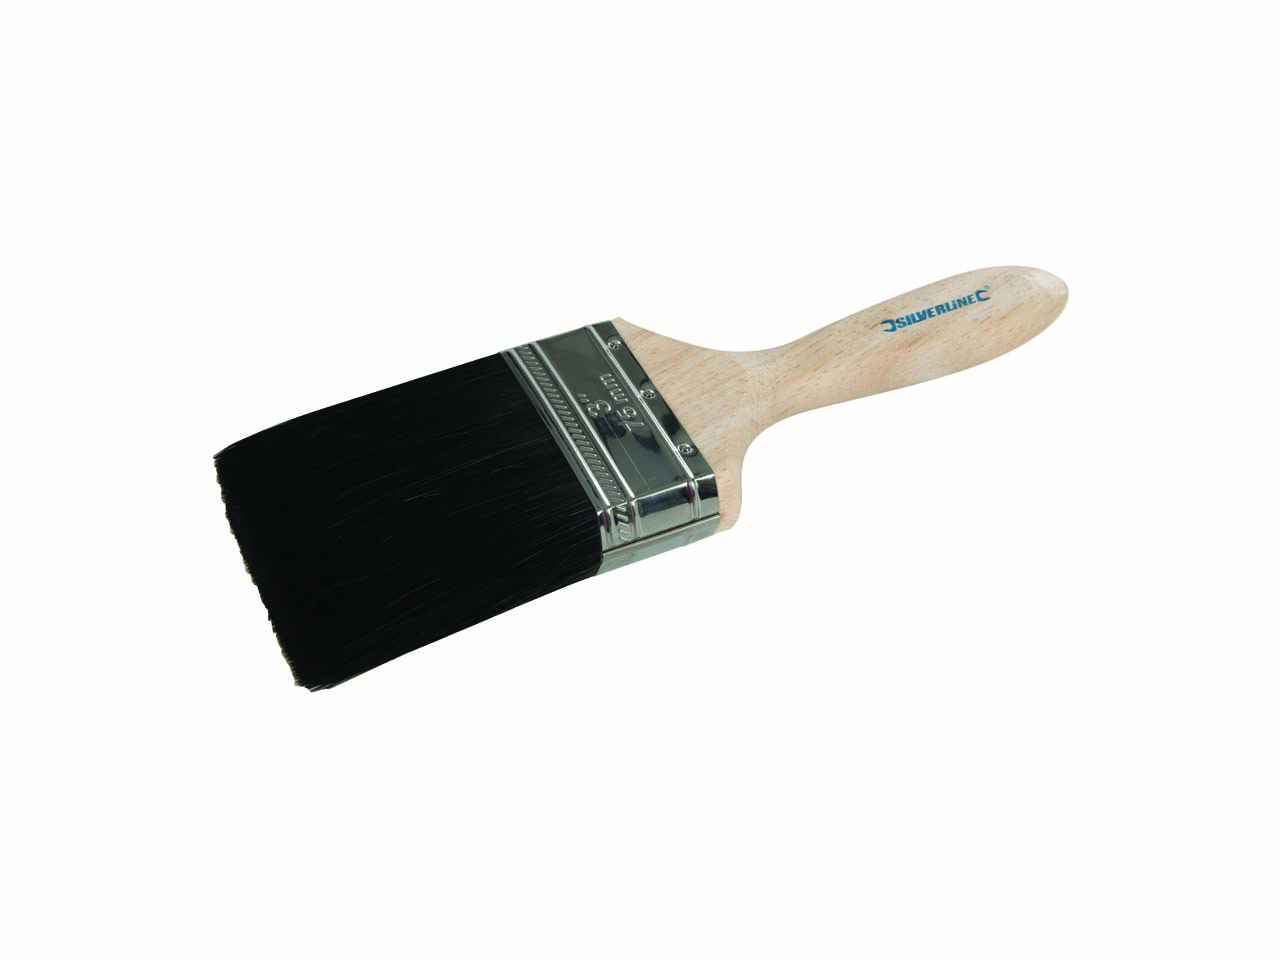 soft bristle paint brush